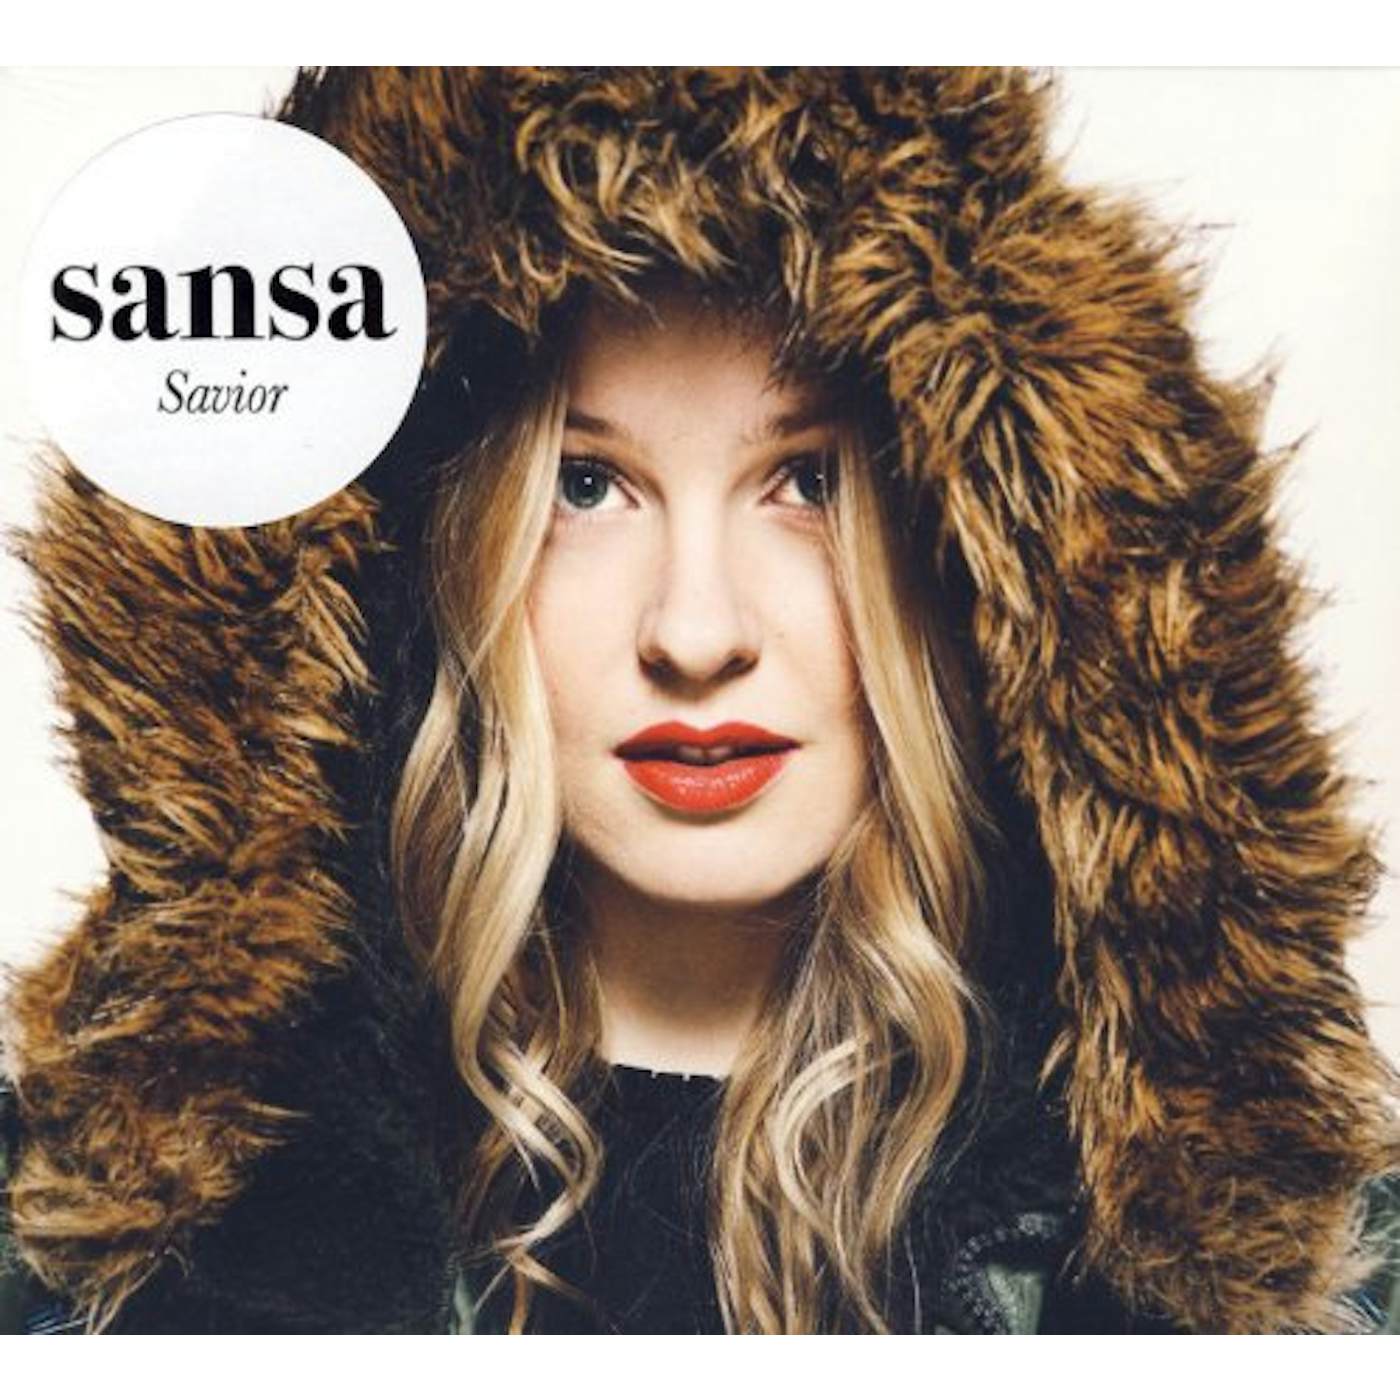 Sansa Savior Vinyl Record